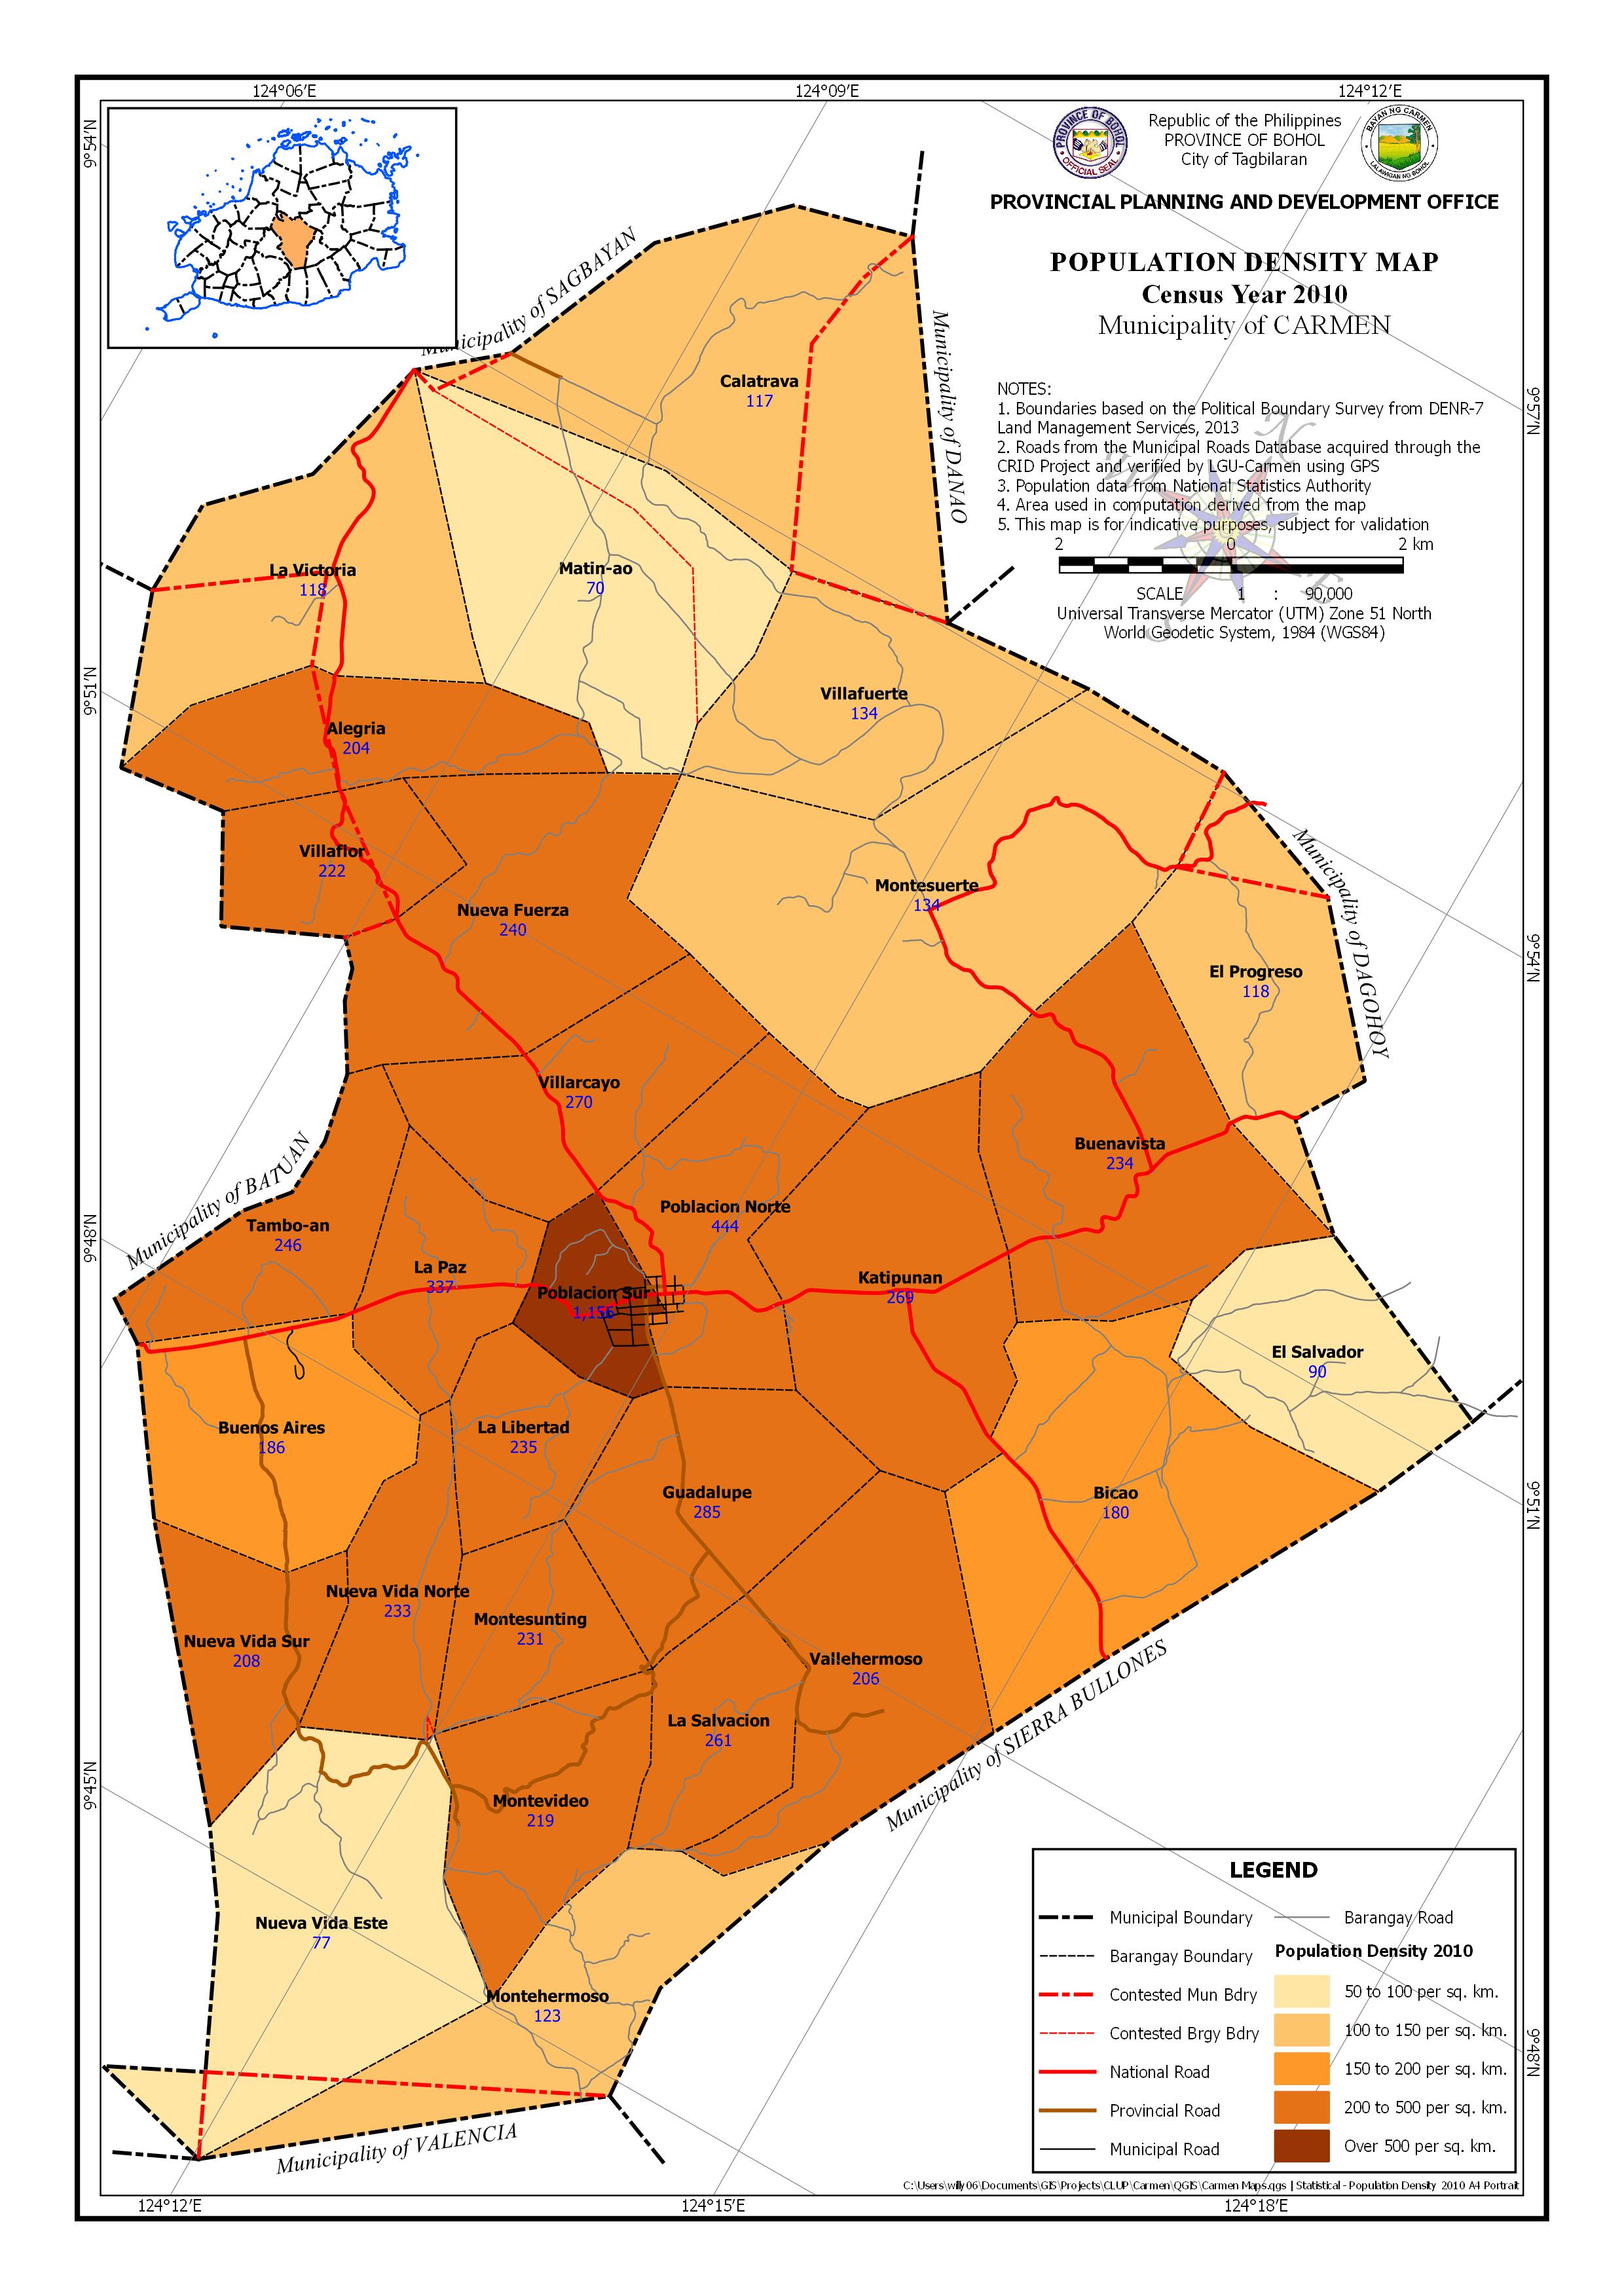 Population Density Census Year: 2010